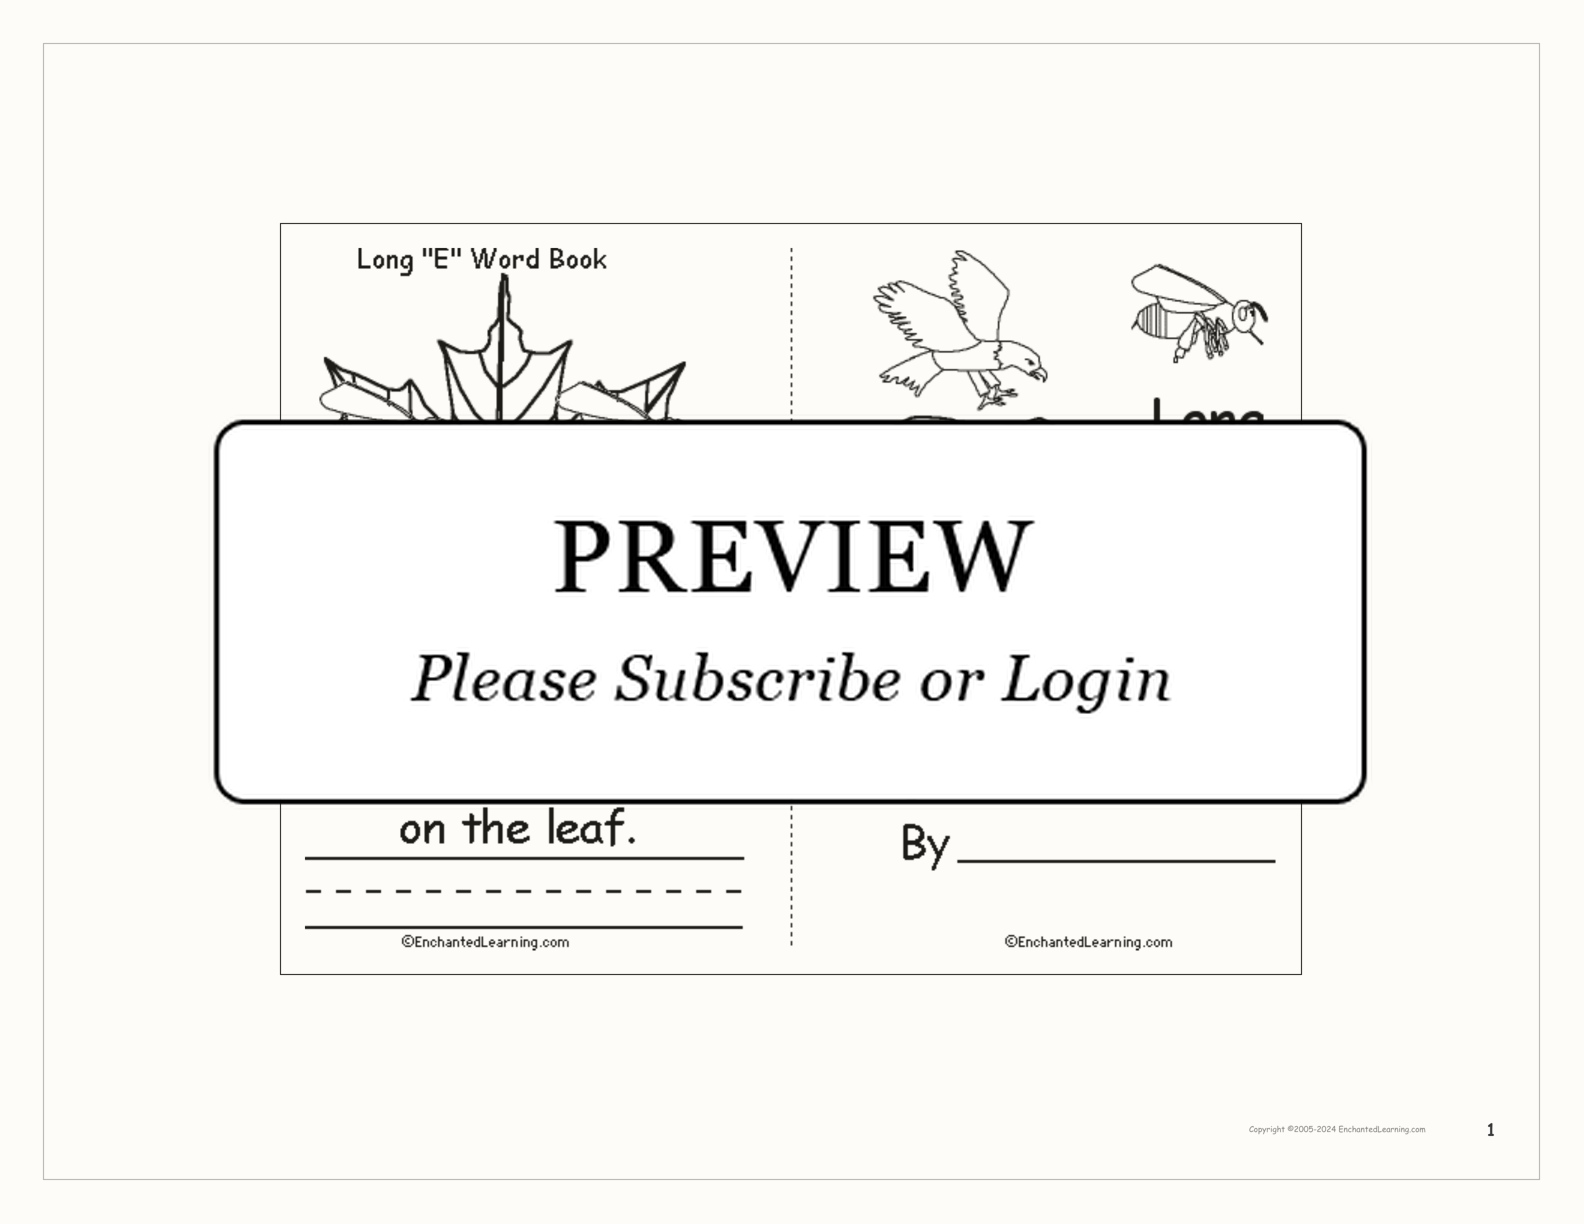 Long 'E' Words Book interactive printout page 1